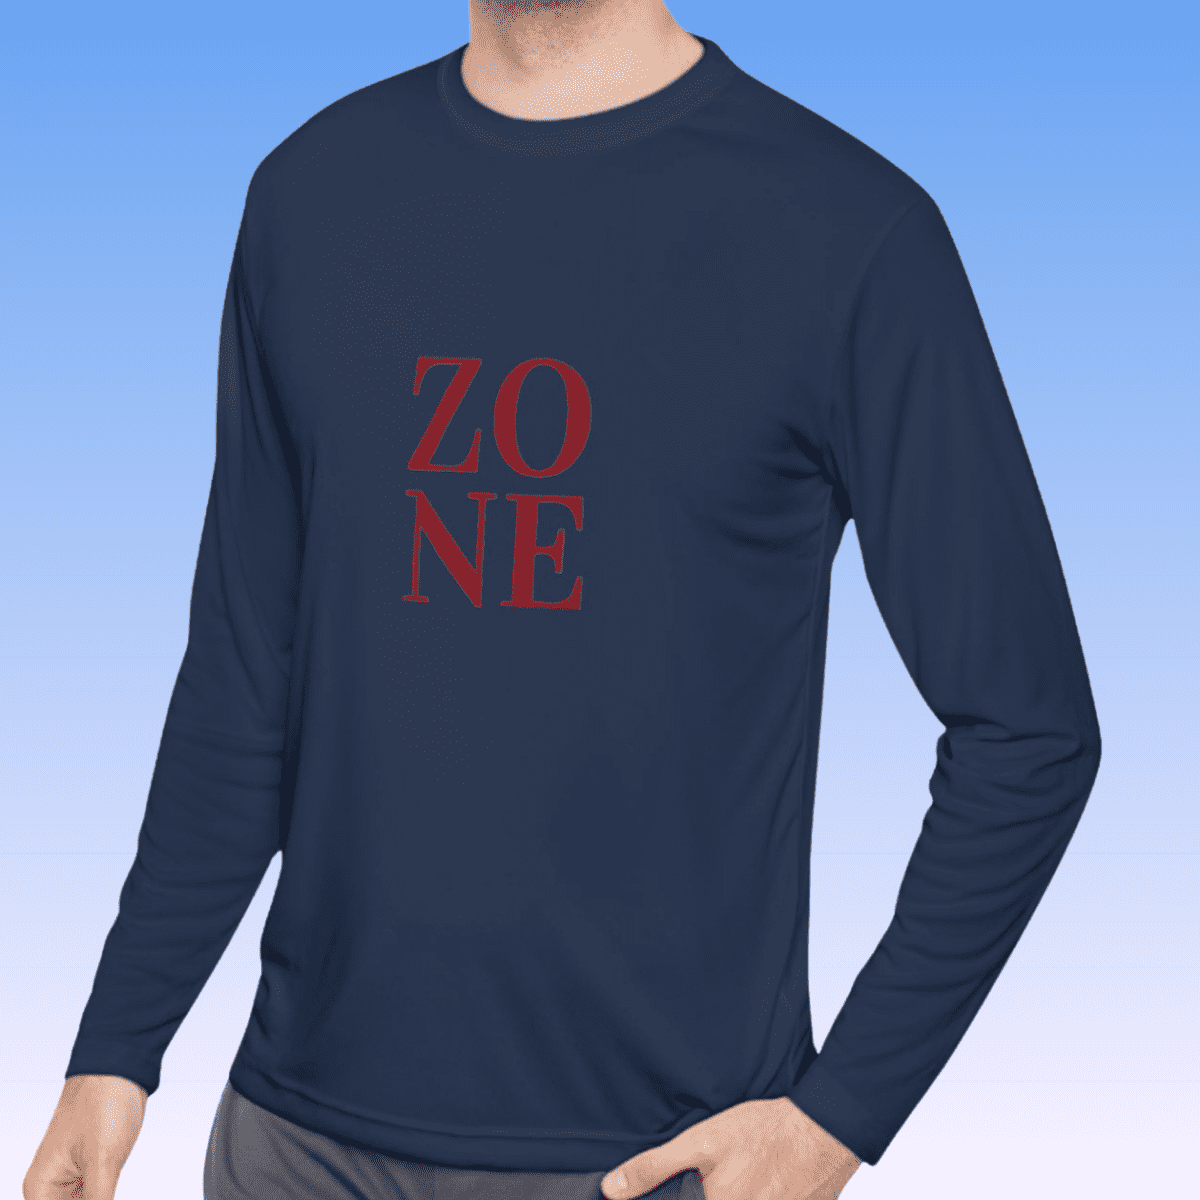 Navy Men's Zone Red Long Sleeve Moisture-Wicking Tee